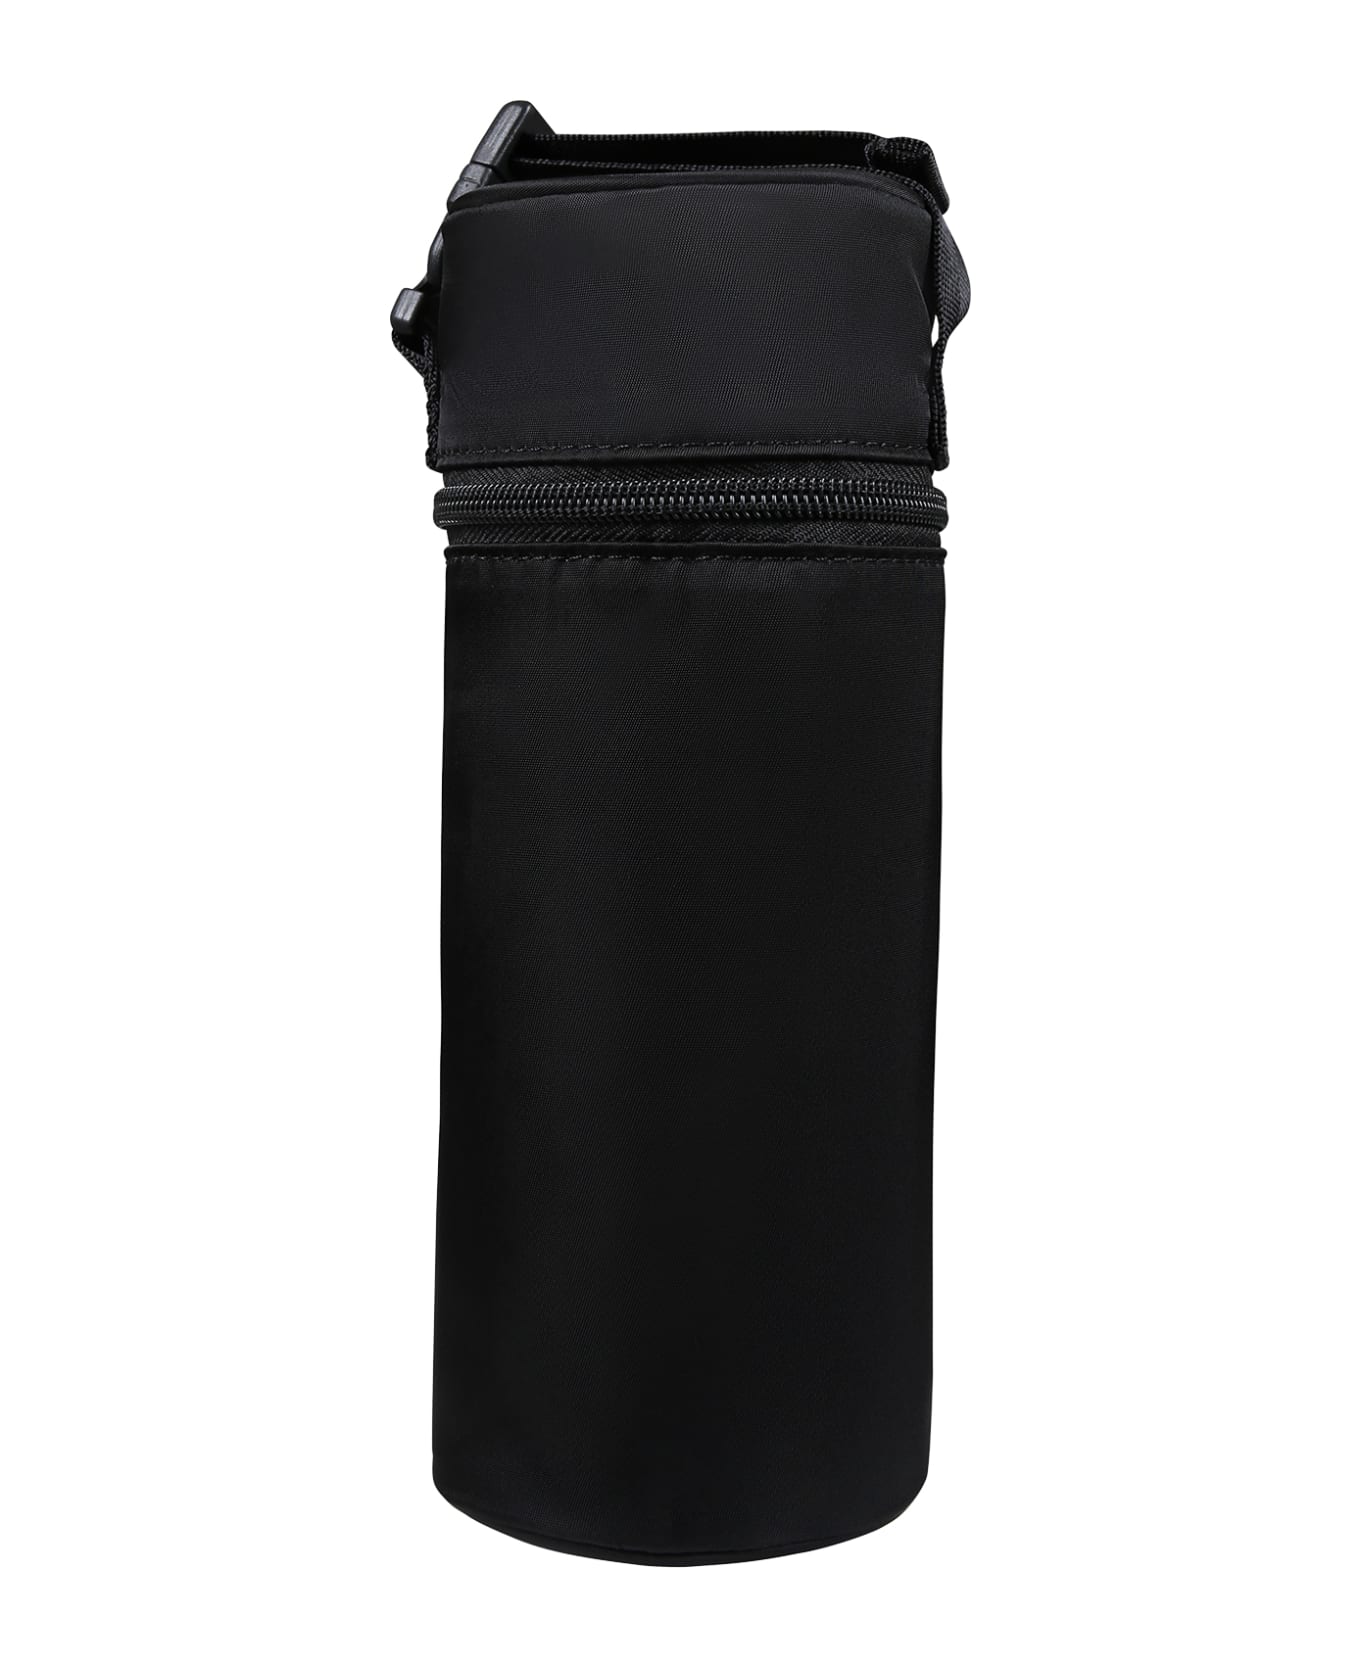 Emporio Armani Black Mum Bag For Babykids With Logo - Black